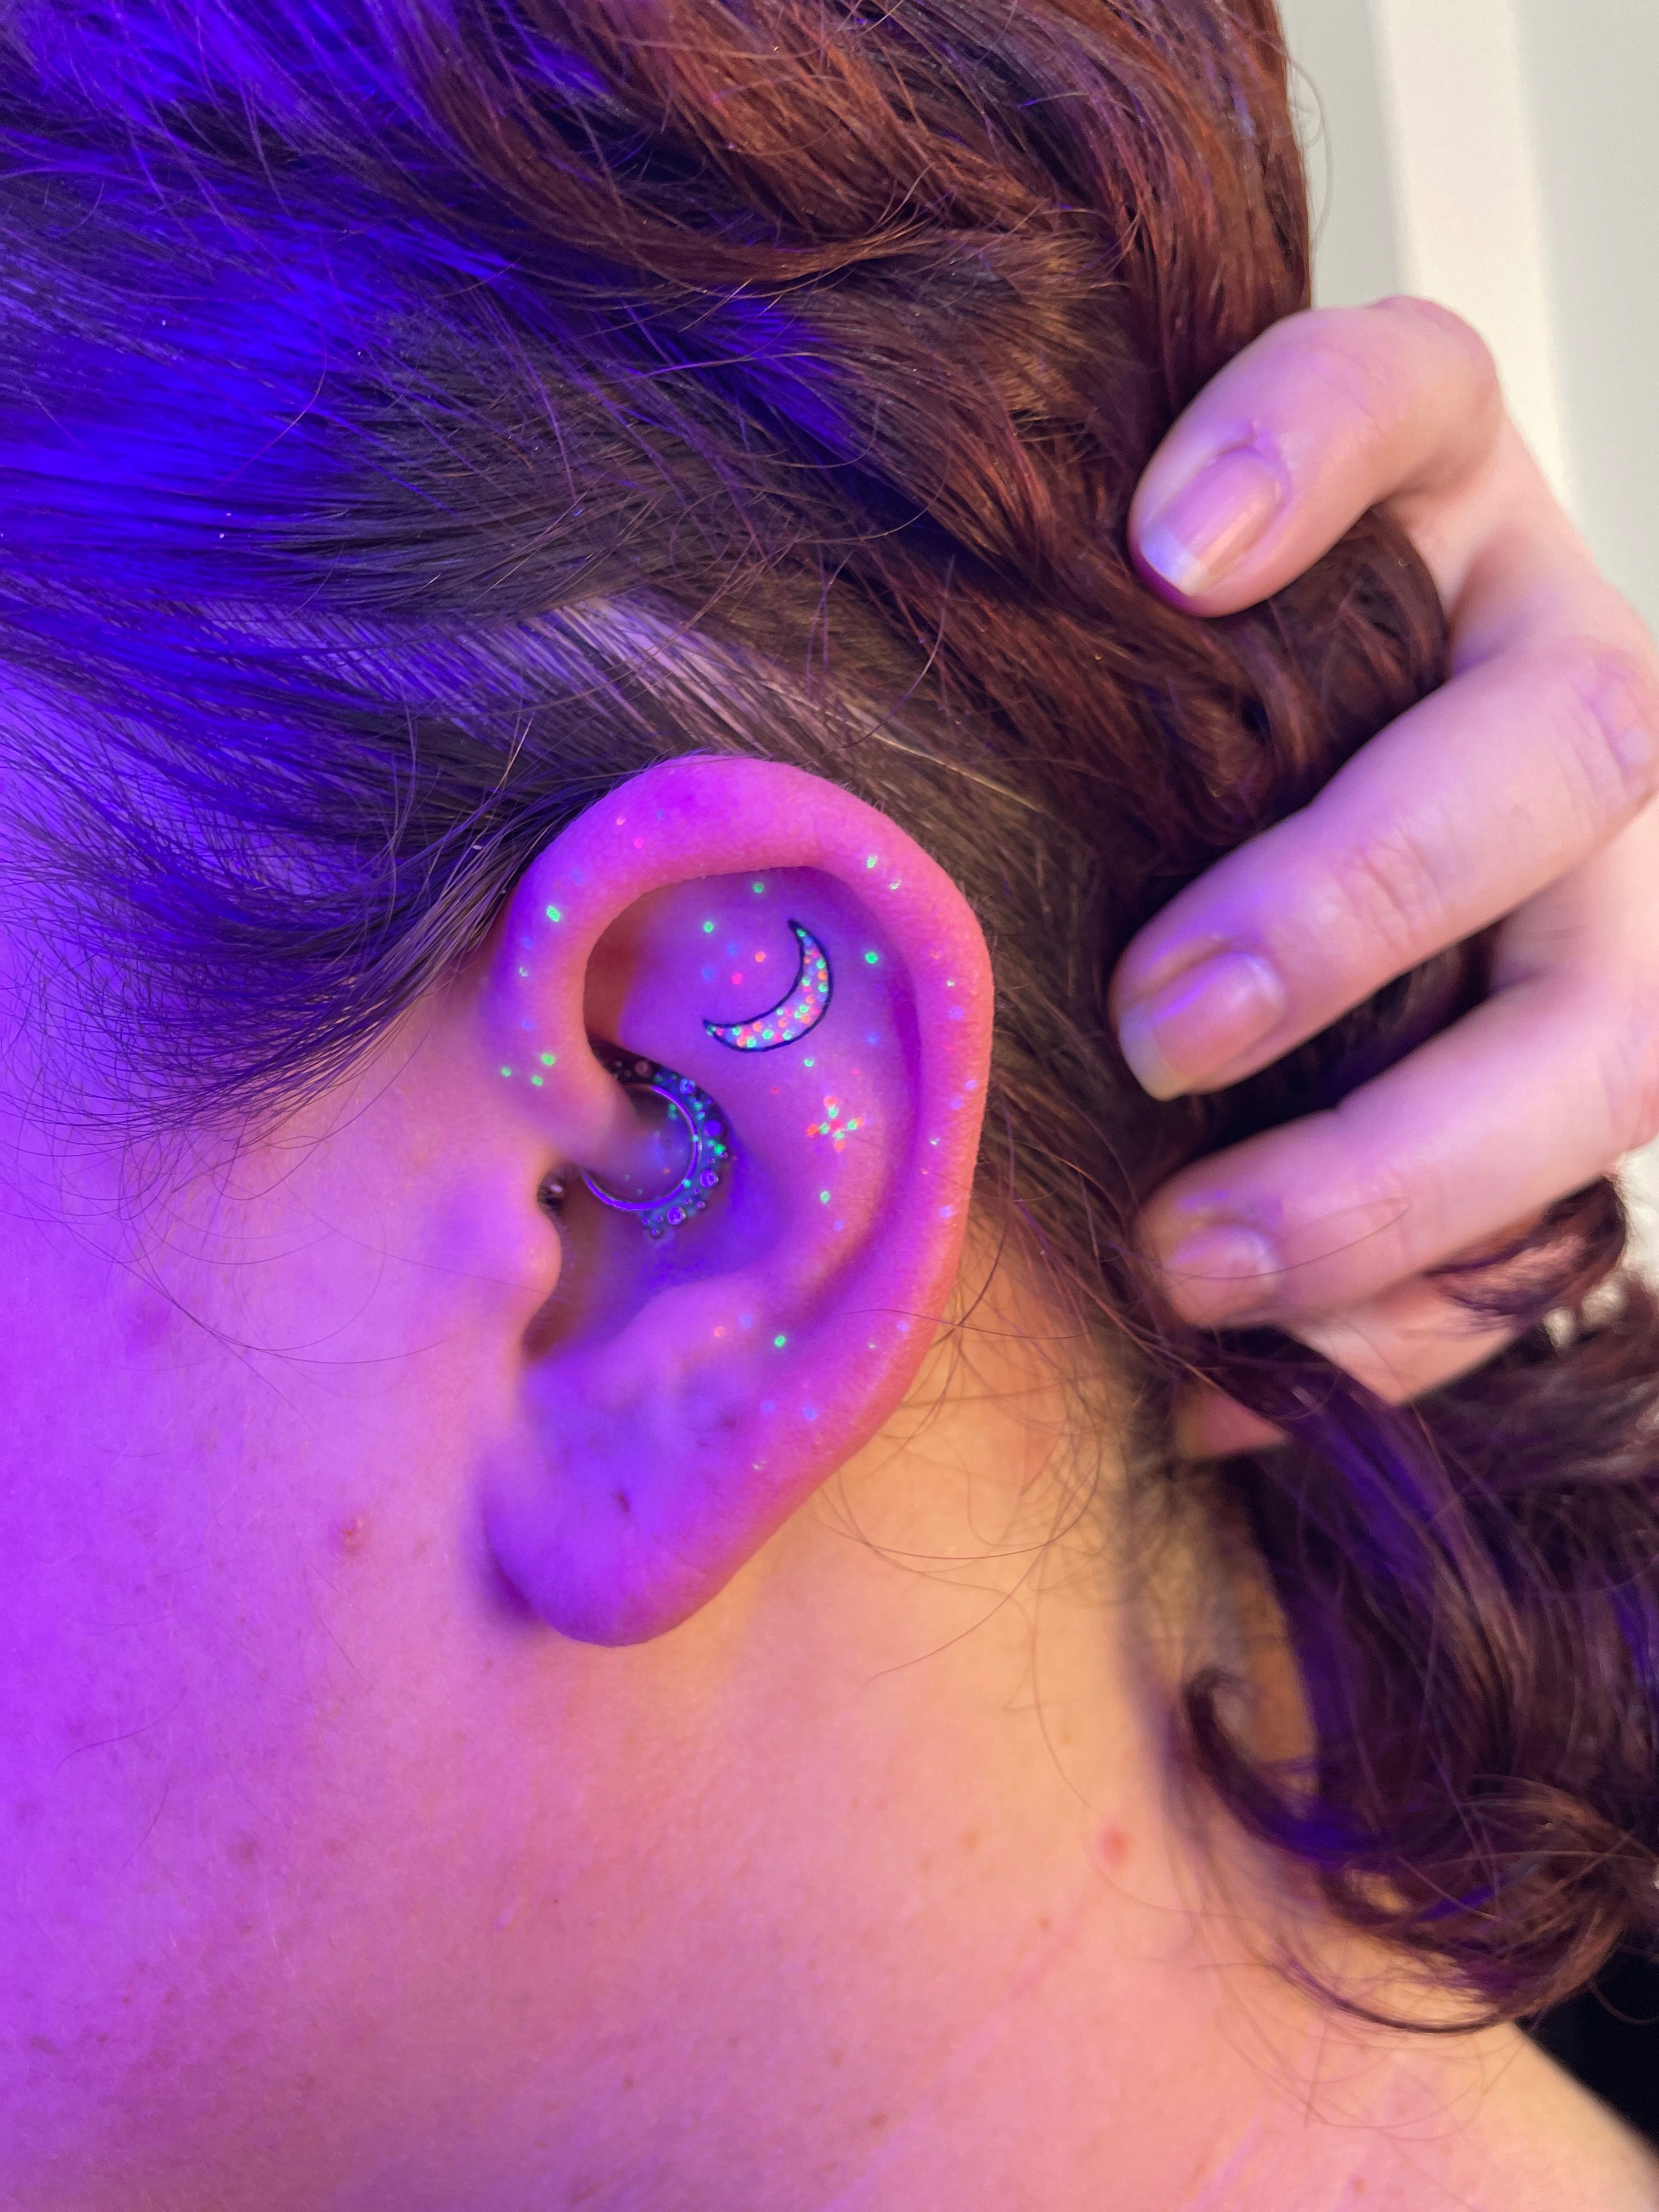 25 Ear Tattoos That Look Dainty & Cute | Glamour UK